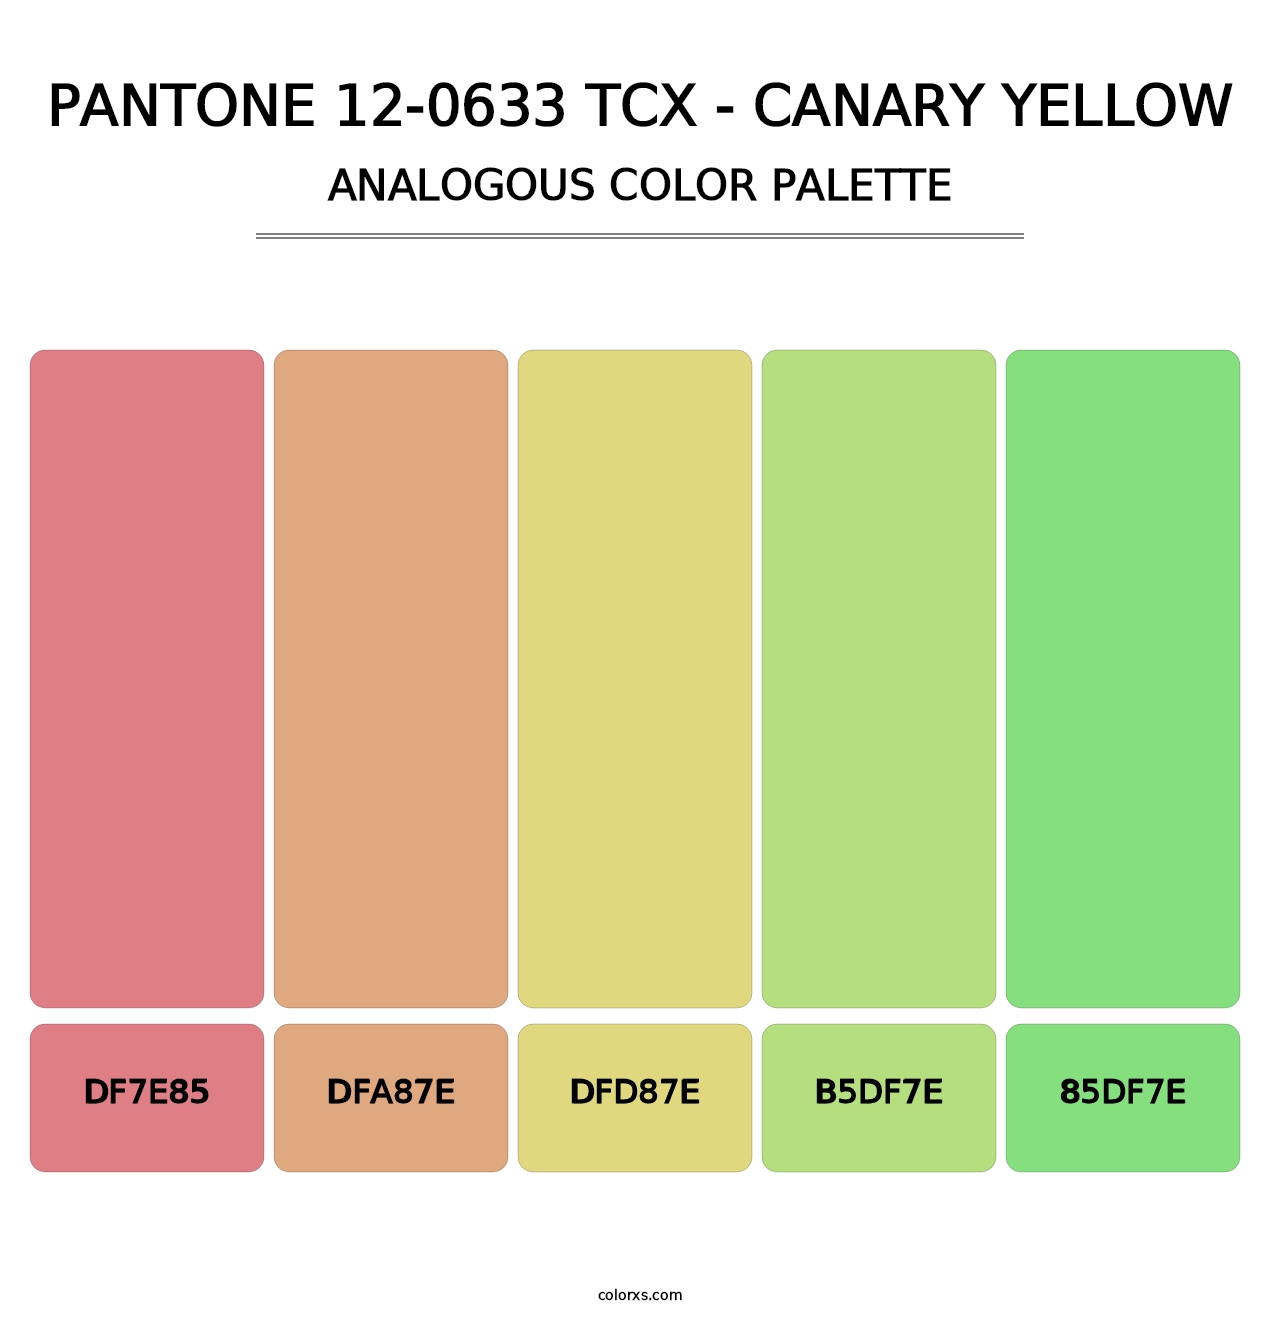 PANTONE 12-0633 TCX - Canary Yellow - Analogous Color Palette